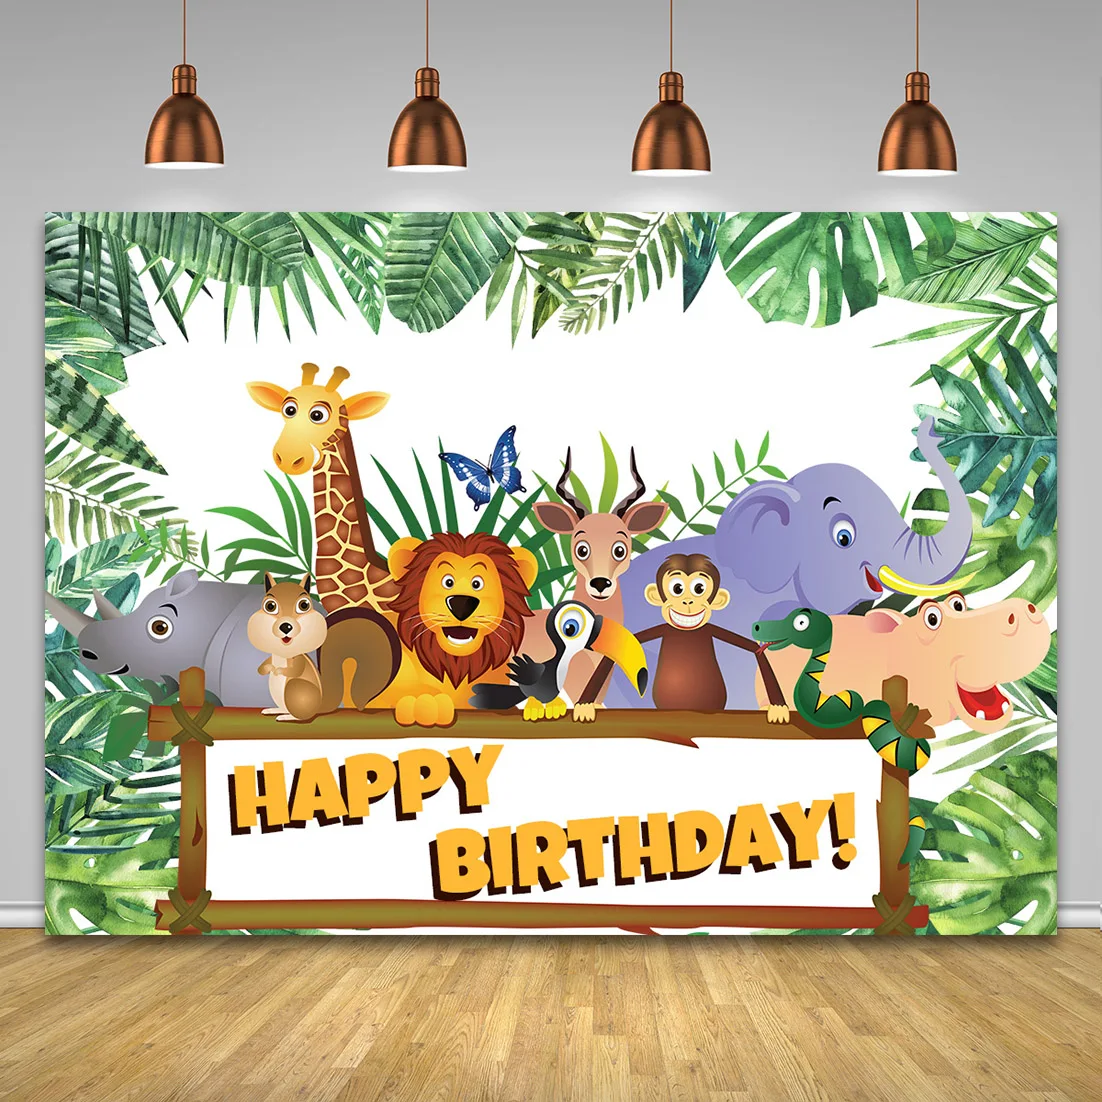 Rainforest Animals Birthday Party Photo Studio Suitable for Family Children Adult Photography Farm Cartoon Children Castle Scene